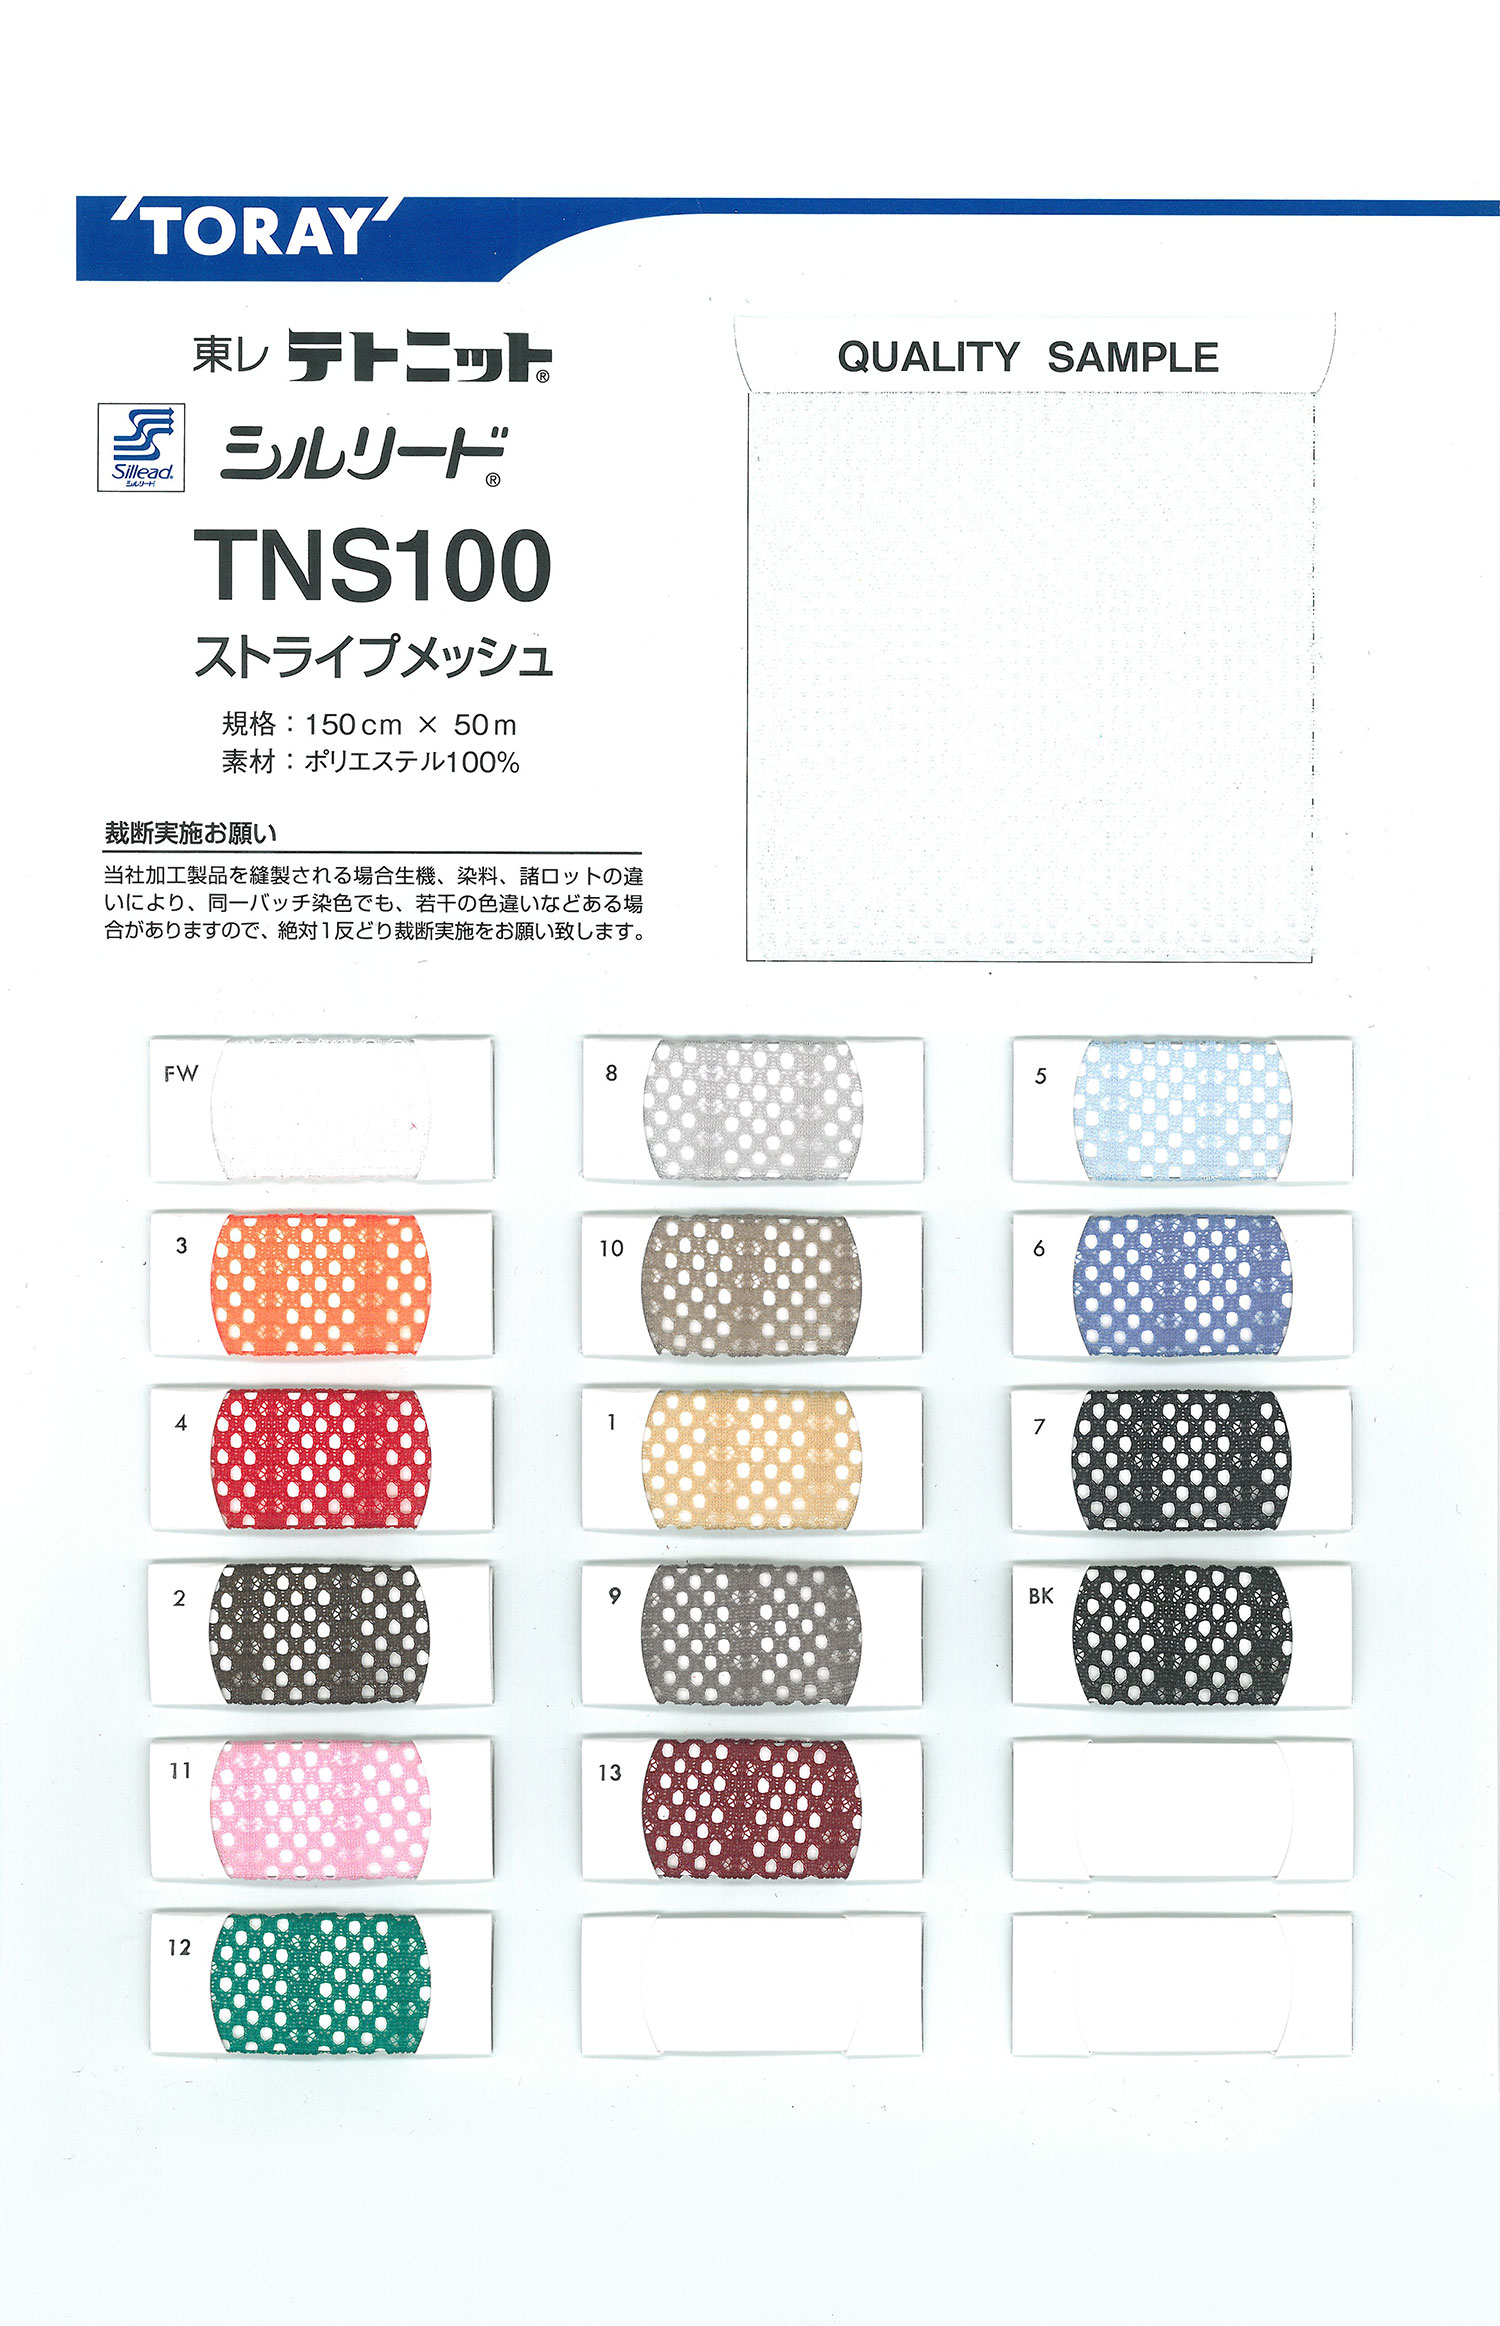 TNS100 Sillead TNS100 Striped Mesh[Lining] TORAY